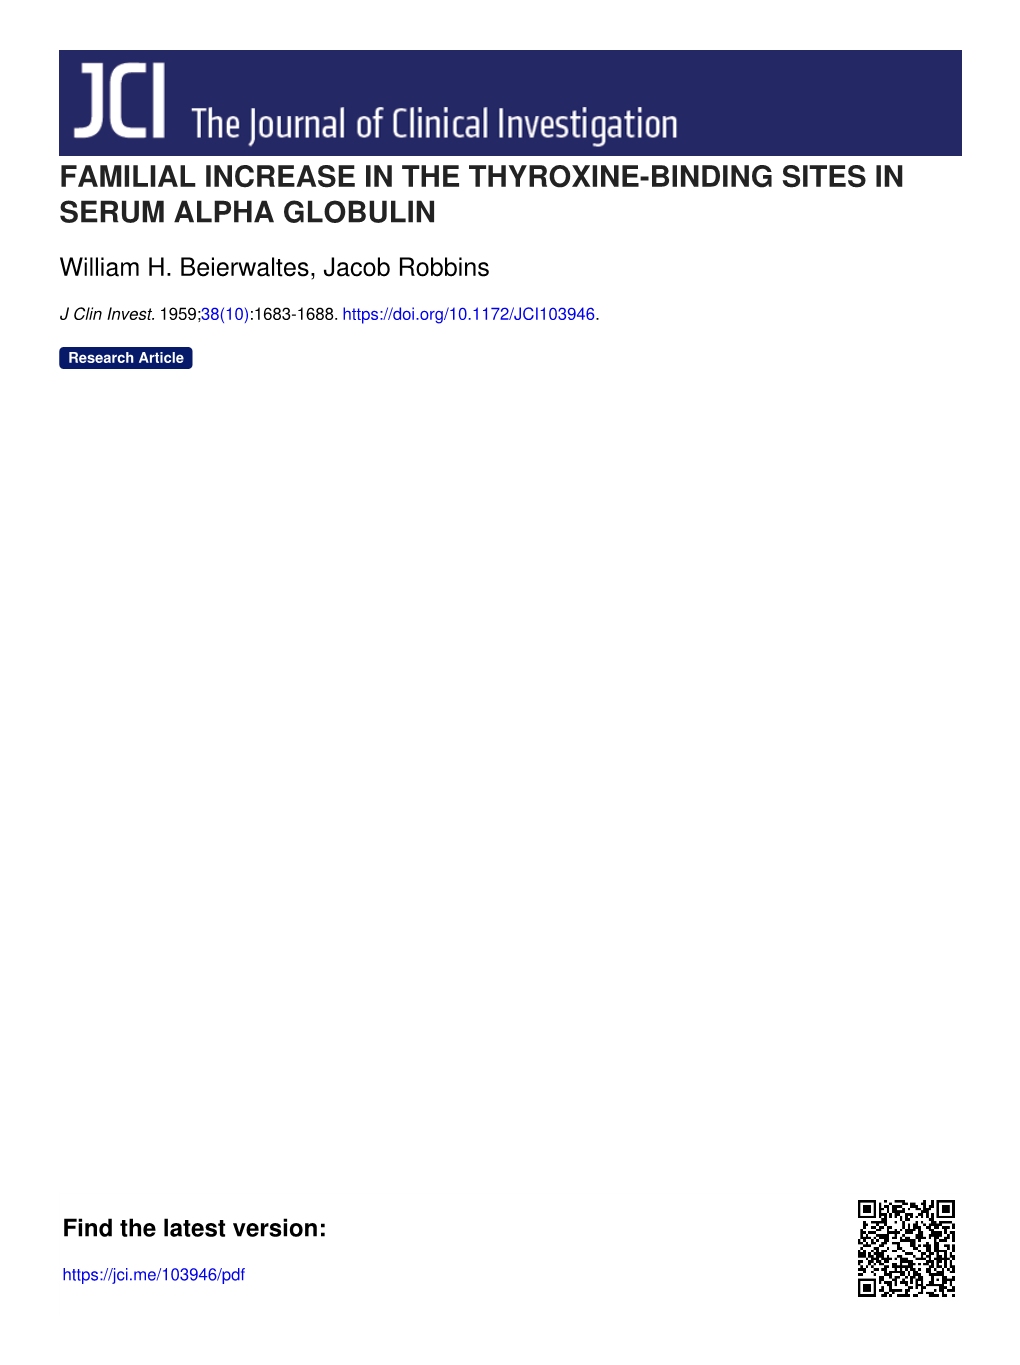 Familial Increase in the Thyroxine-Binding Sites in Serum Alpha Globulin